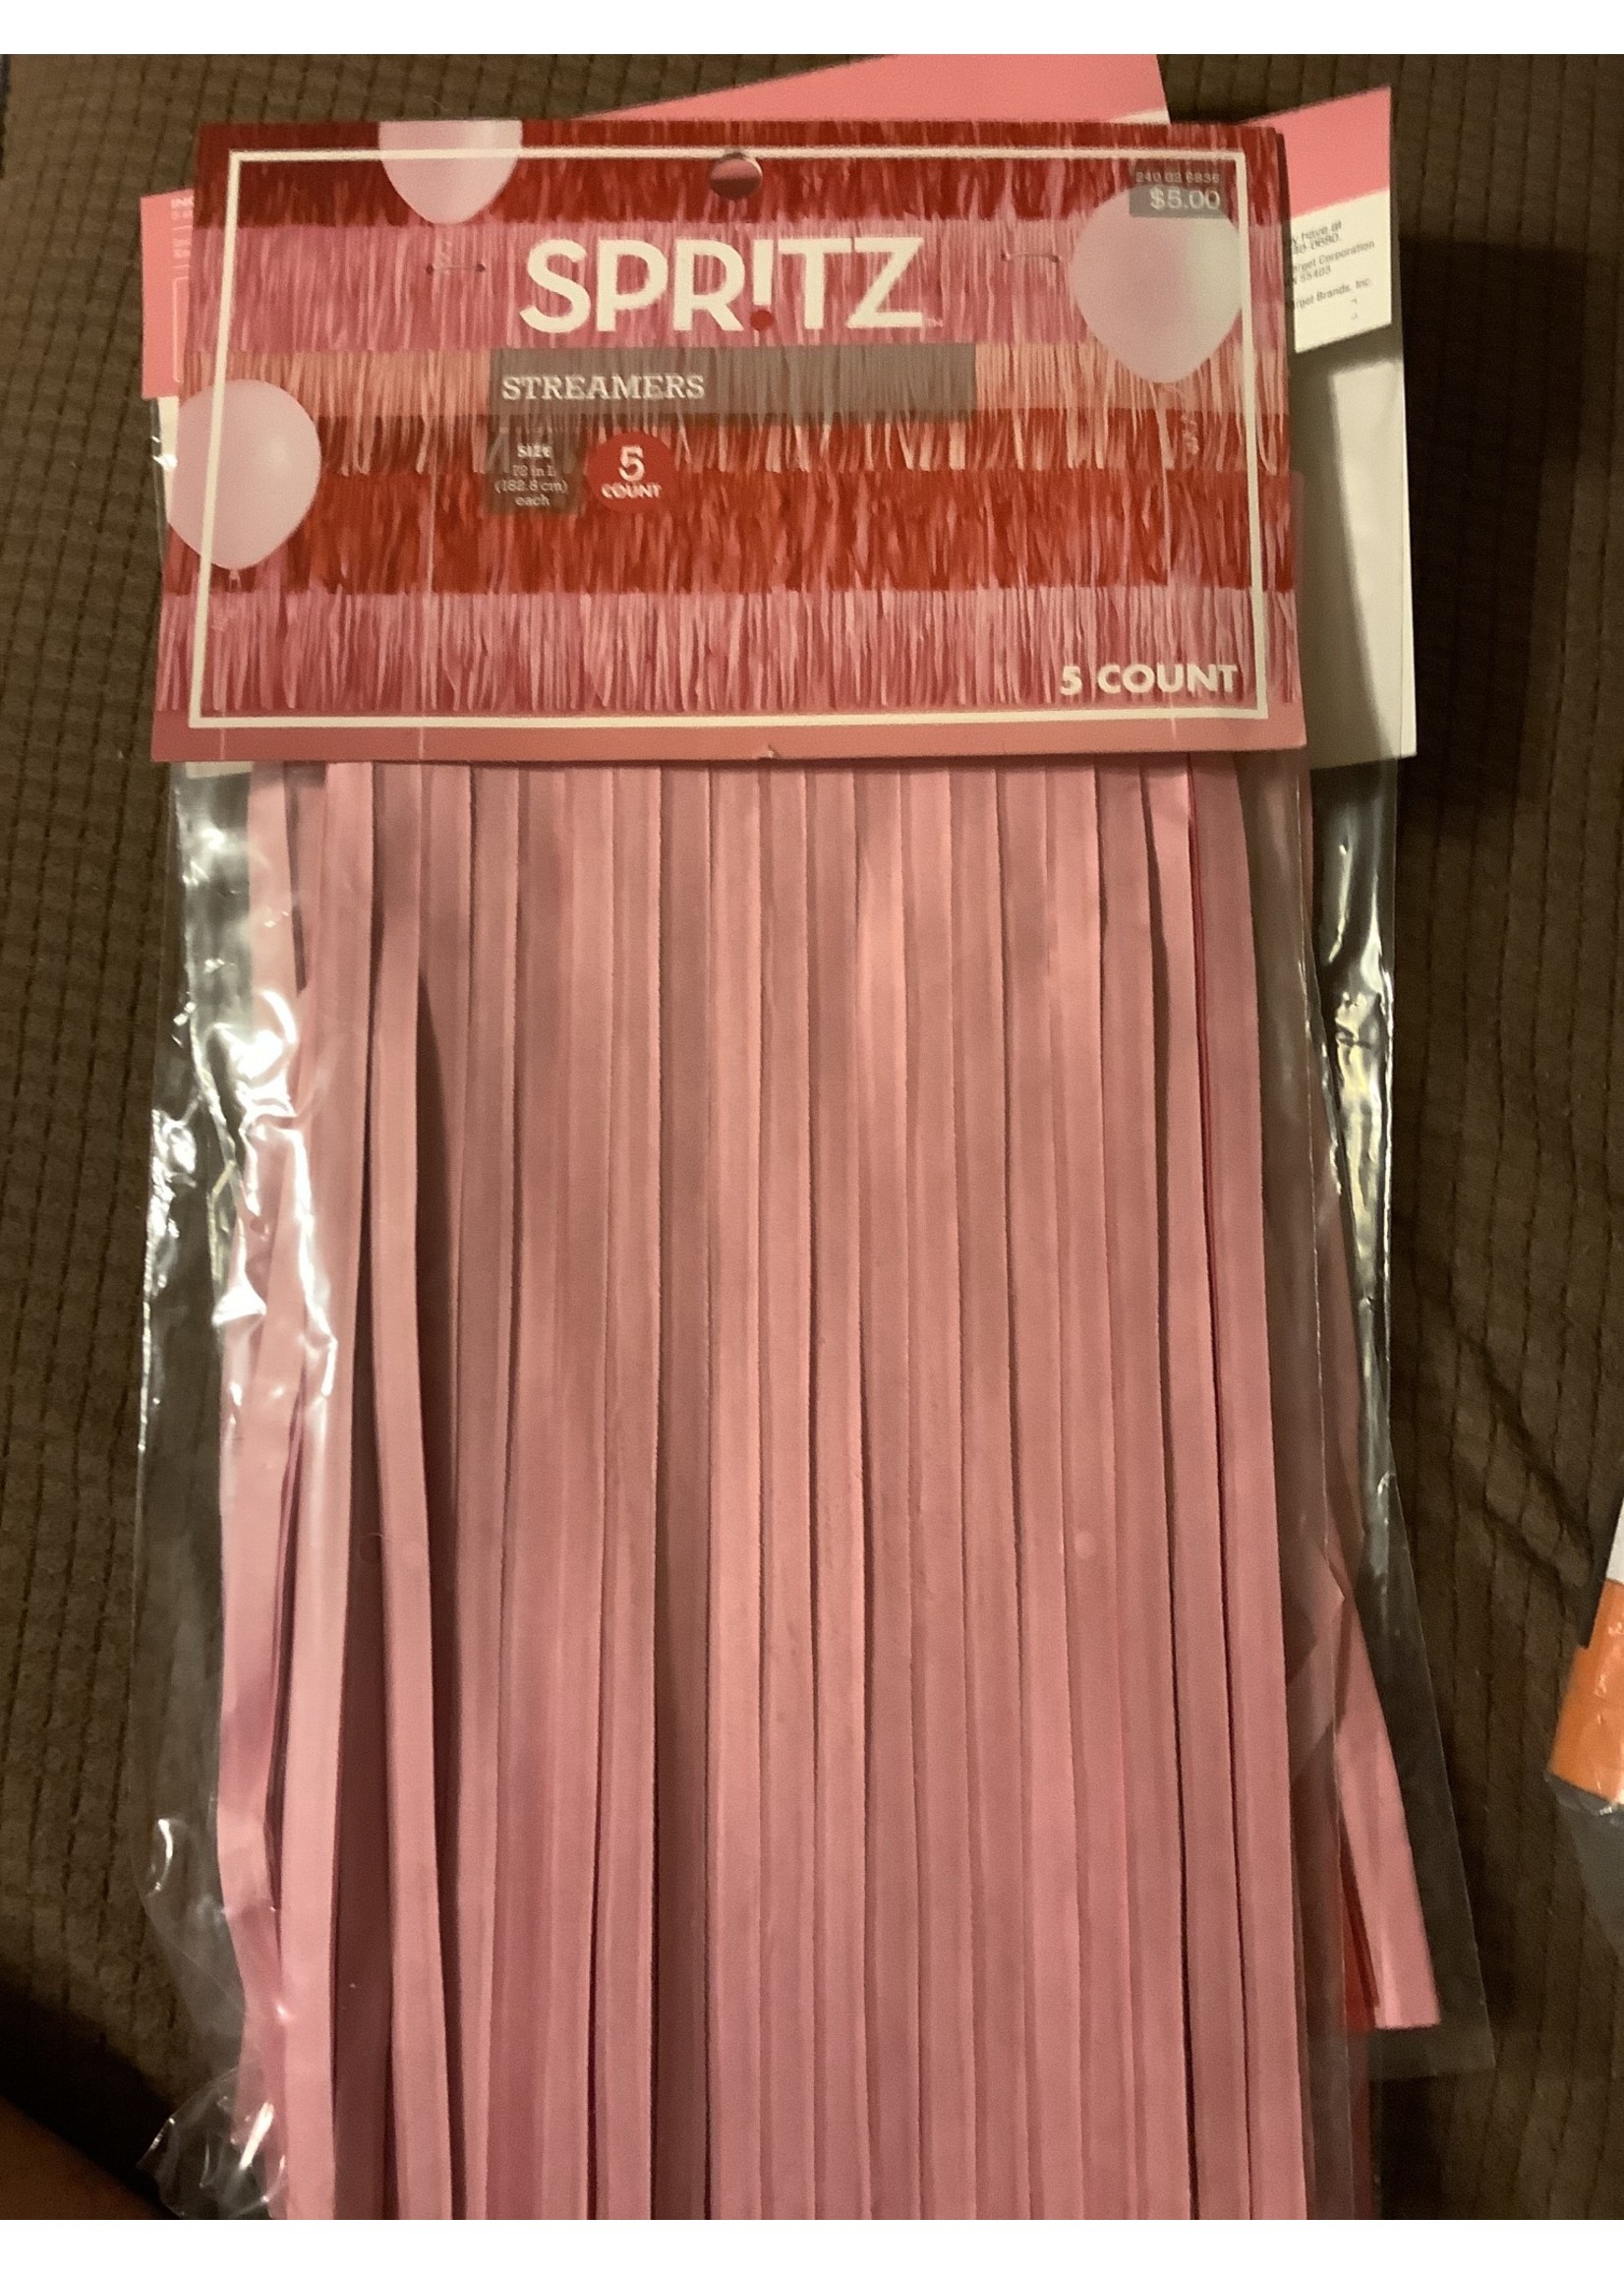 Paper Streamer Valentine's Kit - Spritz